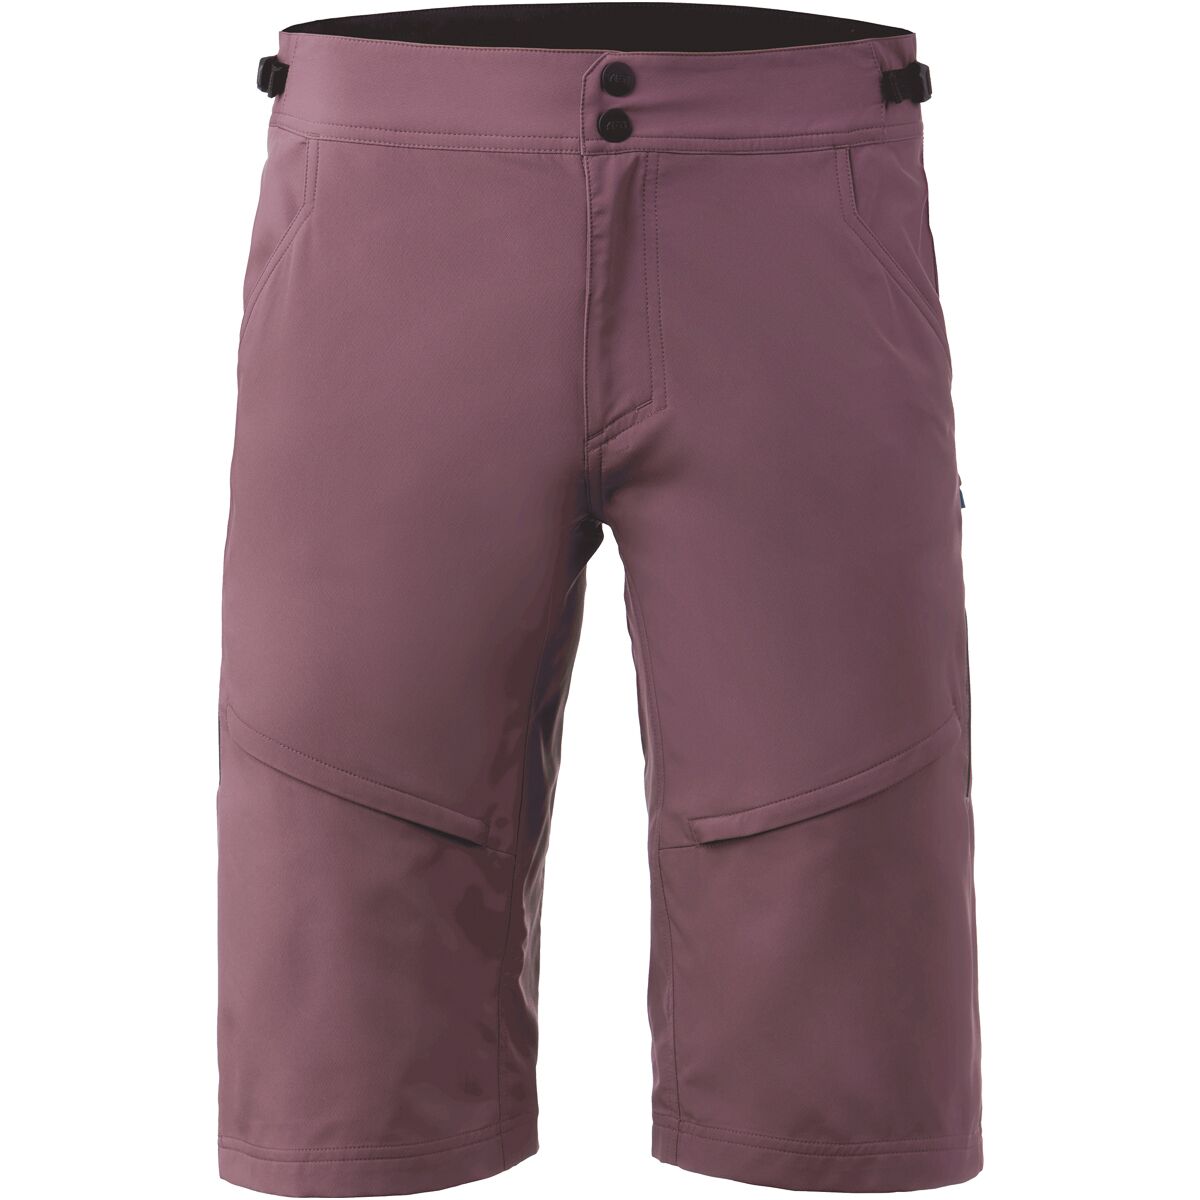 Yeti Cycles Freeland Short - Men's Dusty Purple, S